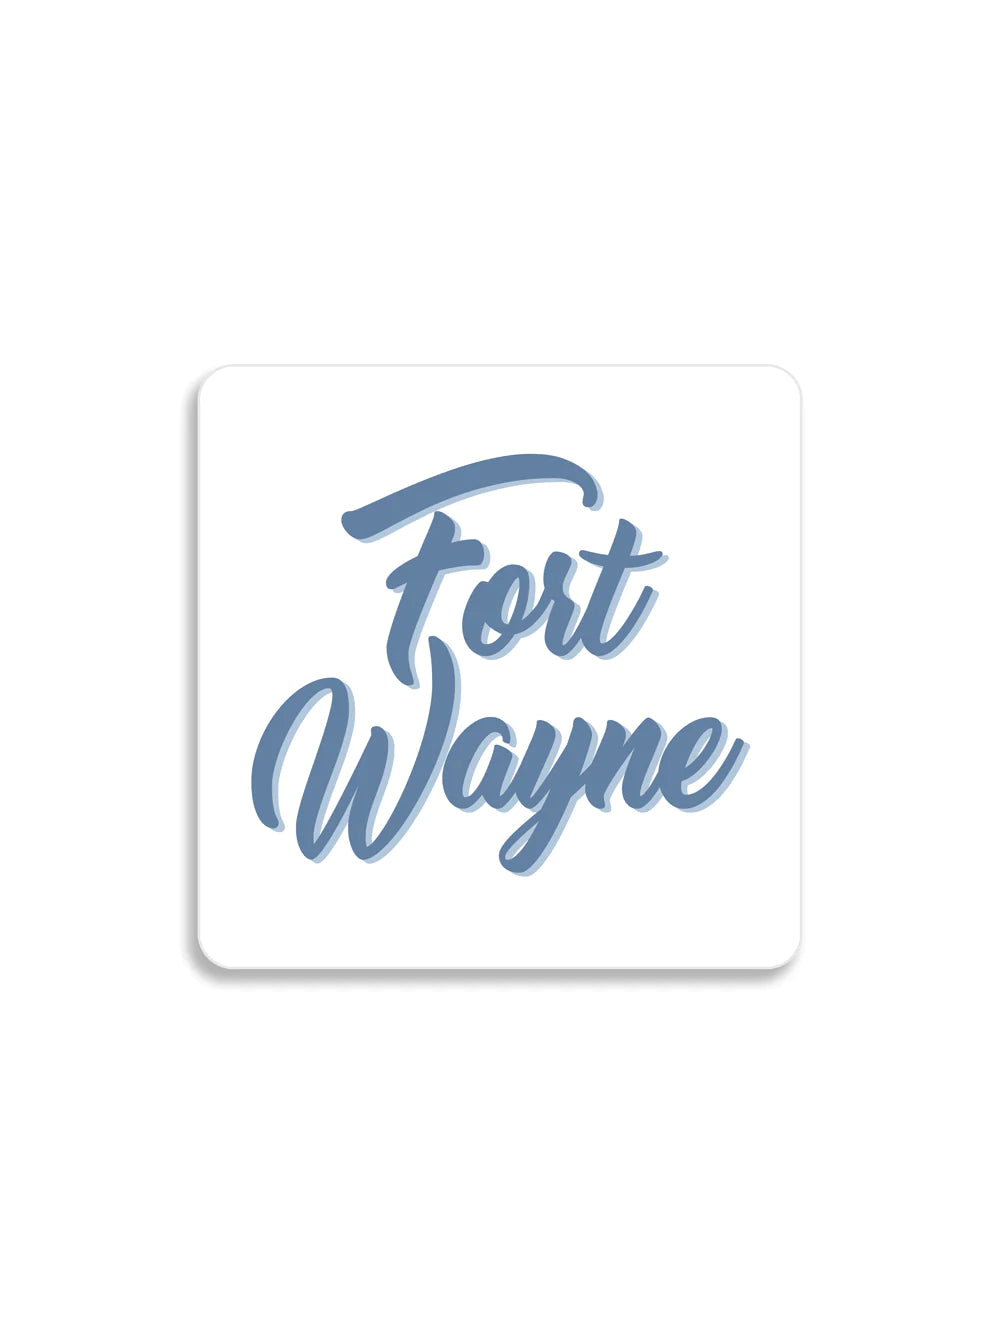 Old Fort Tee Co. Signature Fort Wayne Magnet - Blue